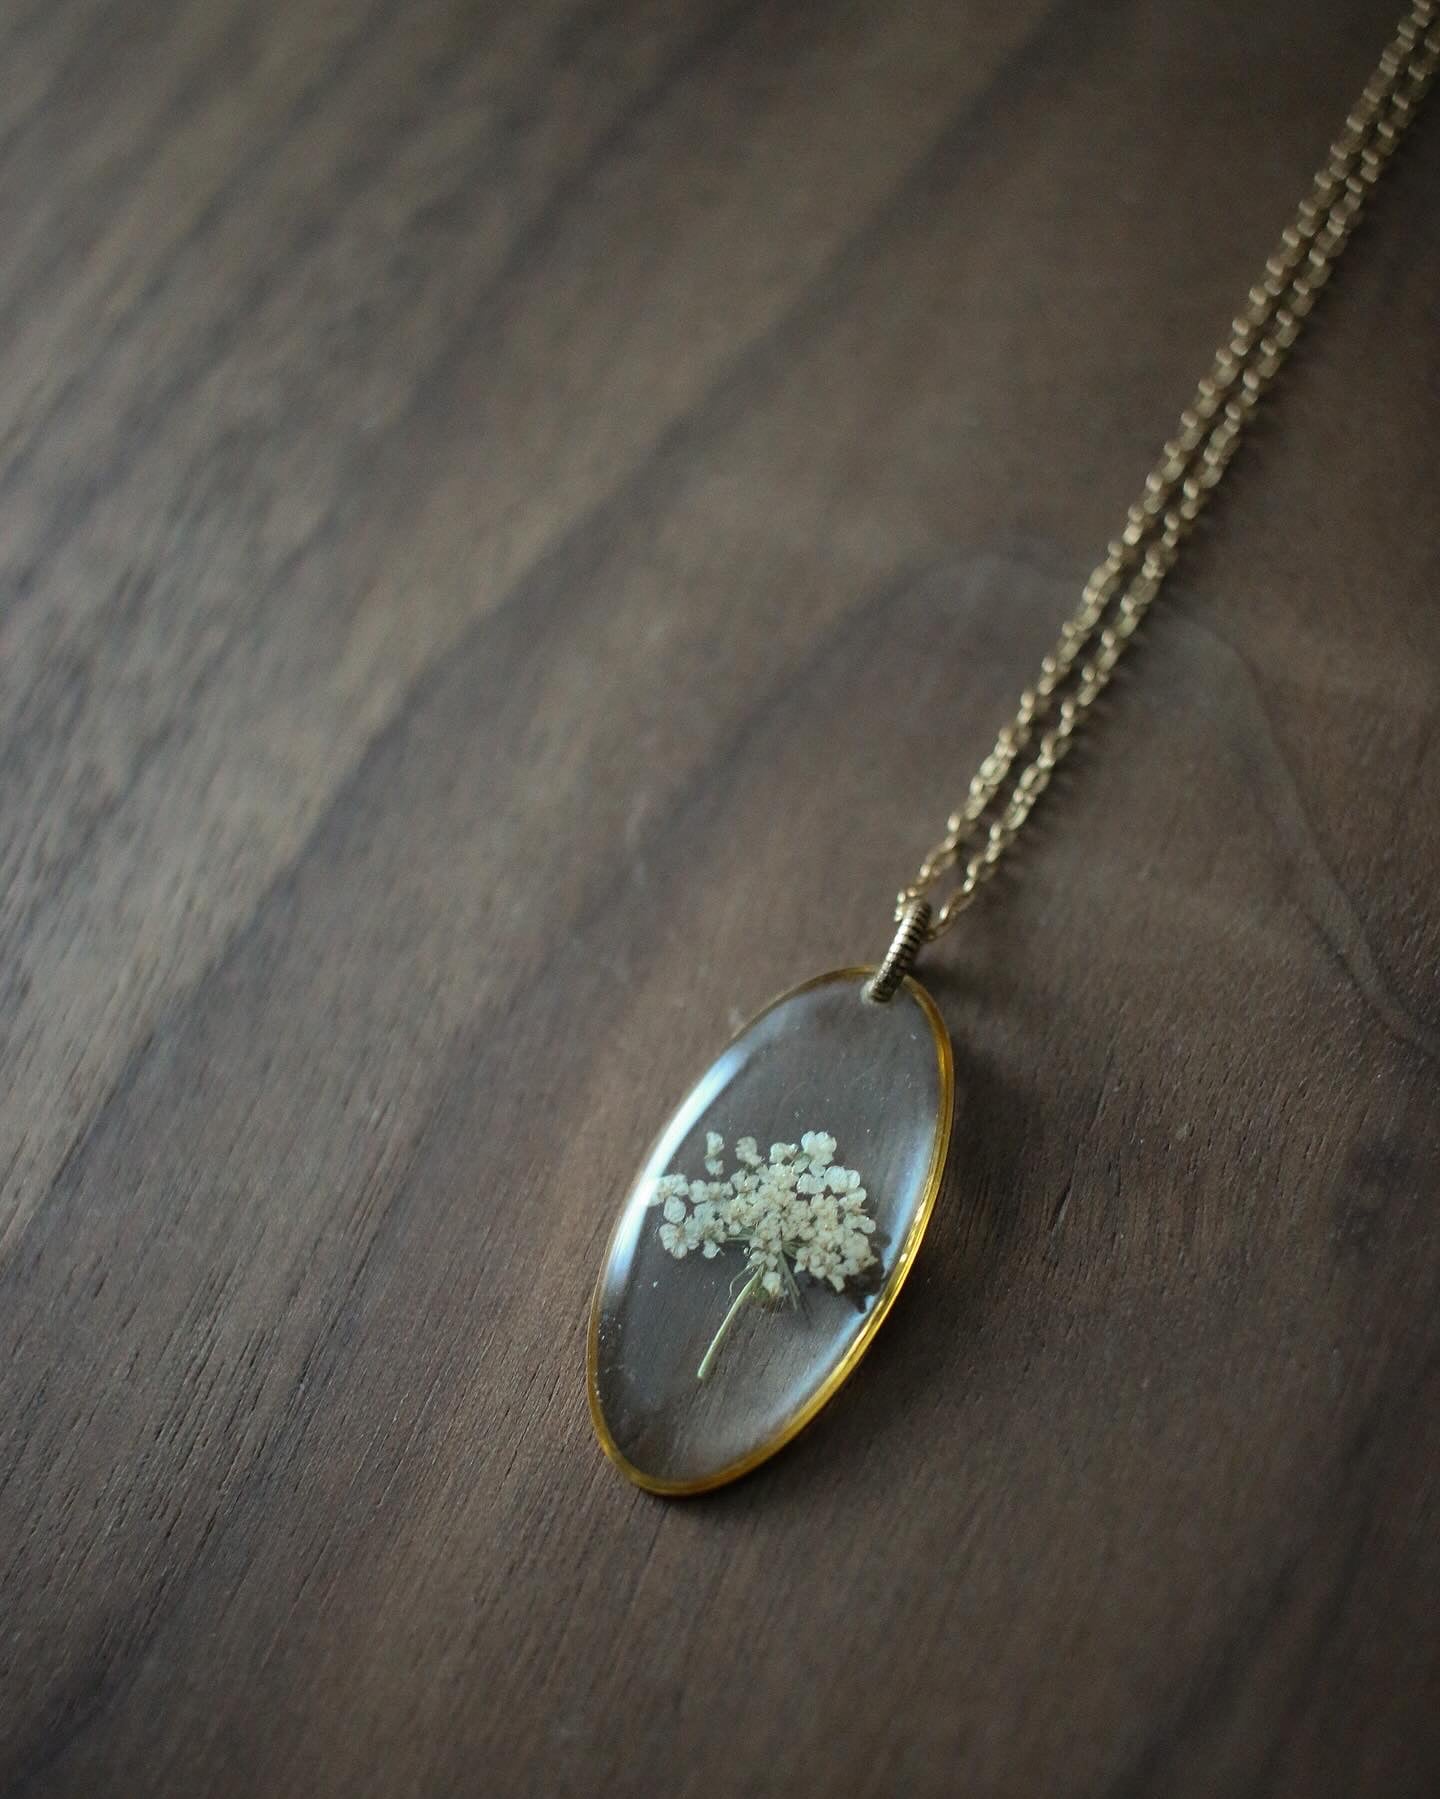 Pemberley Garden Necklace (Queen Anne's lace)